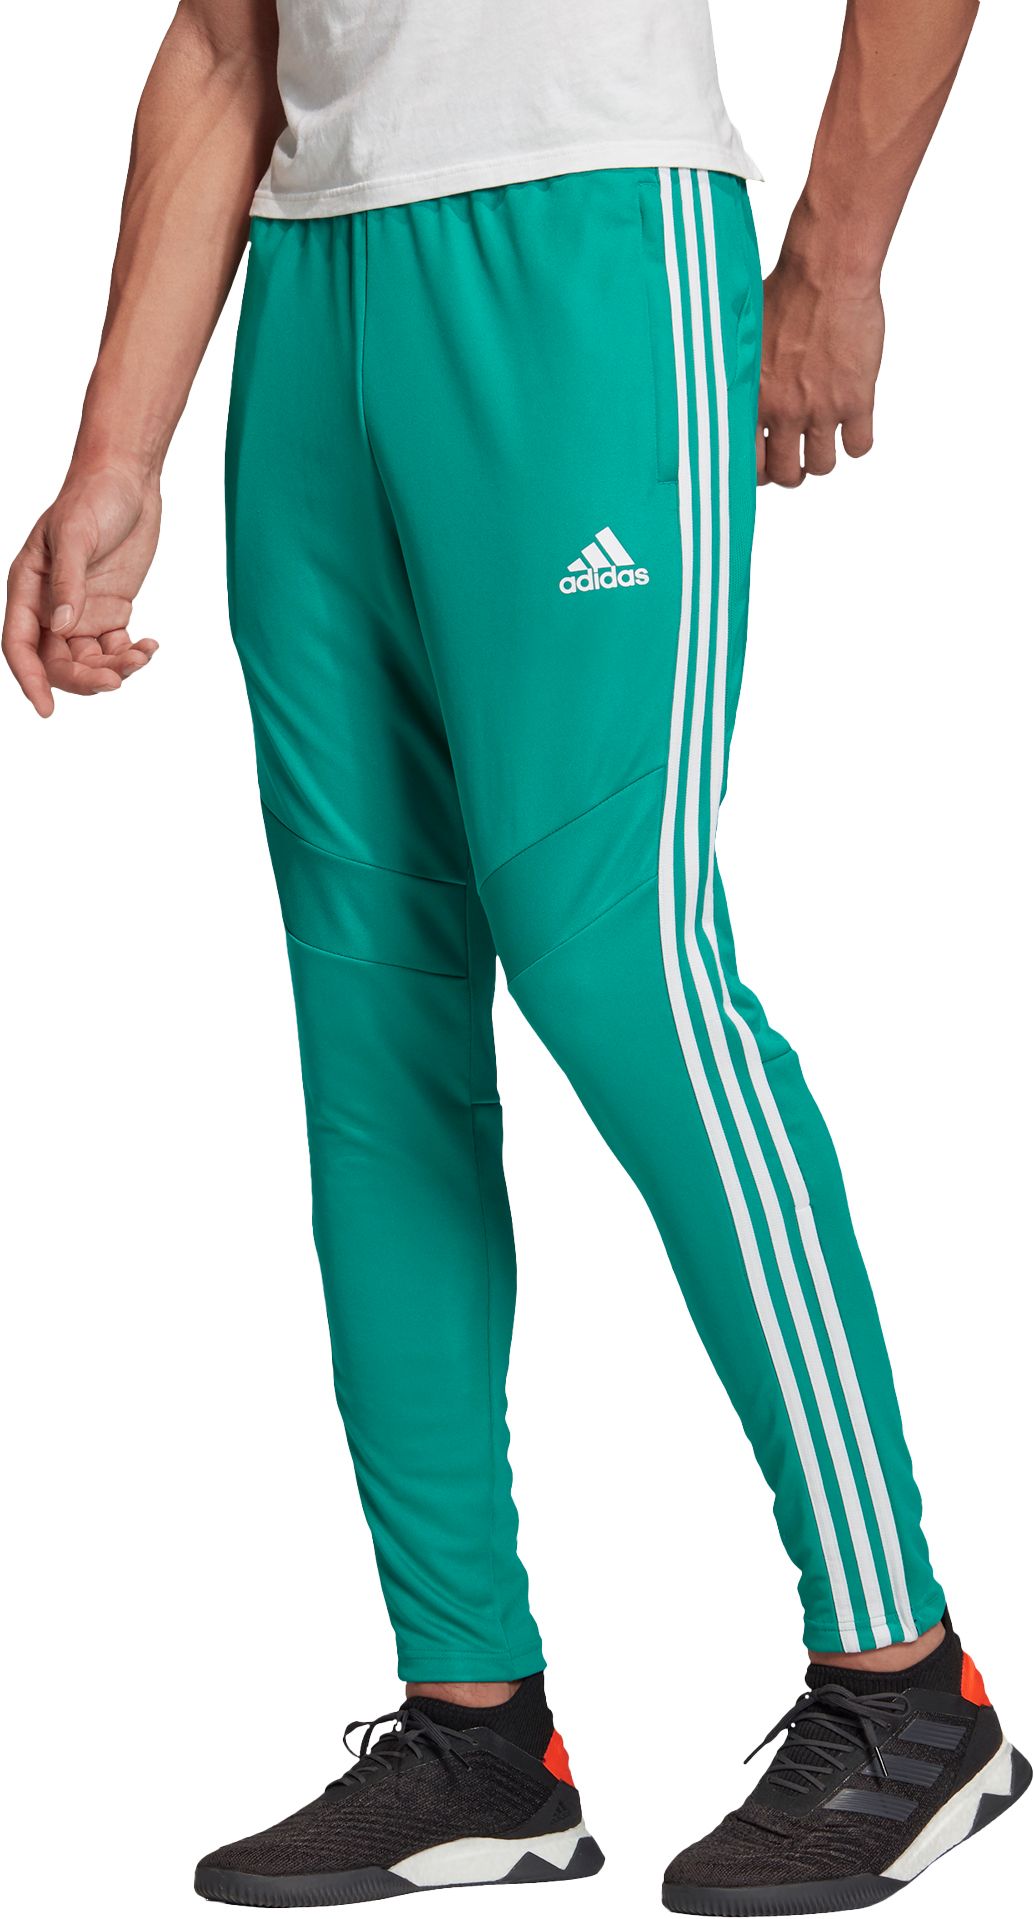 glory green adidas pants